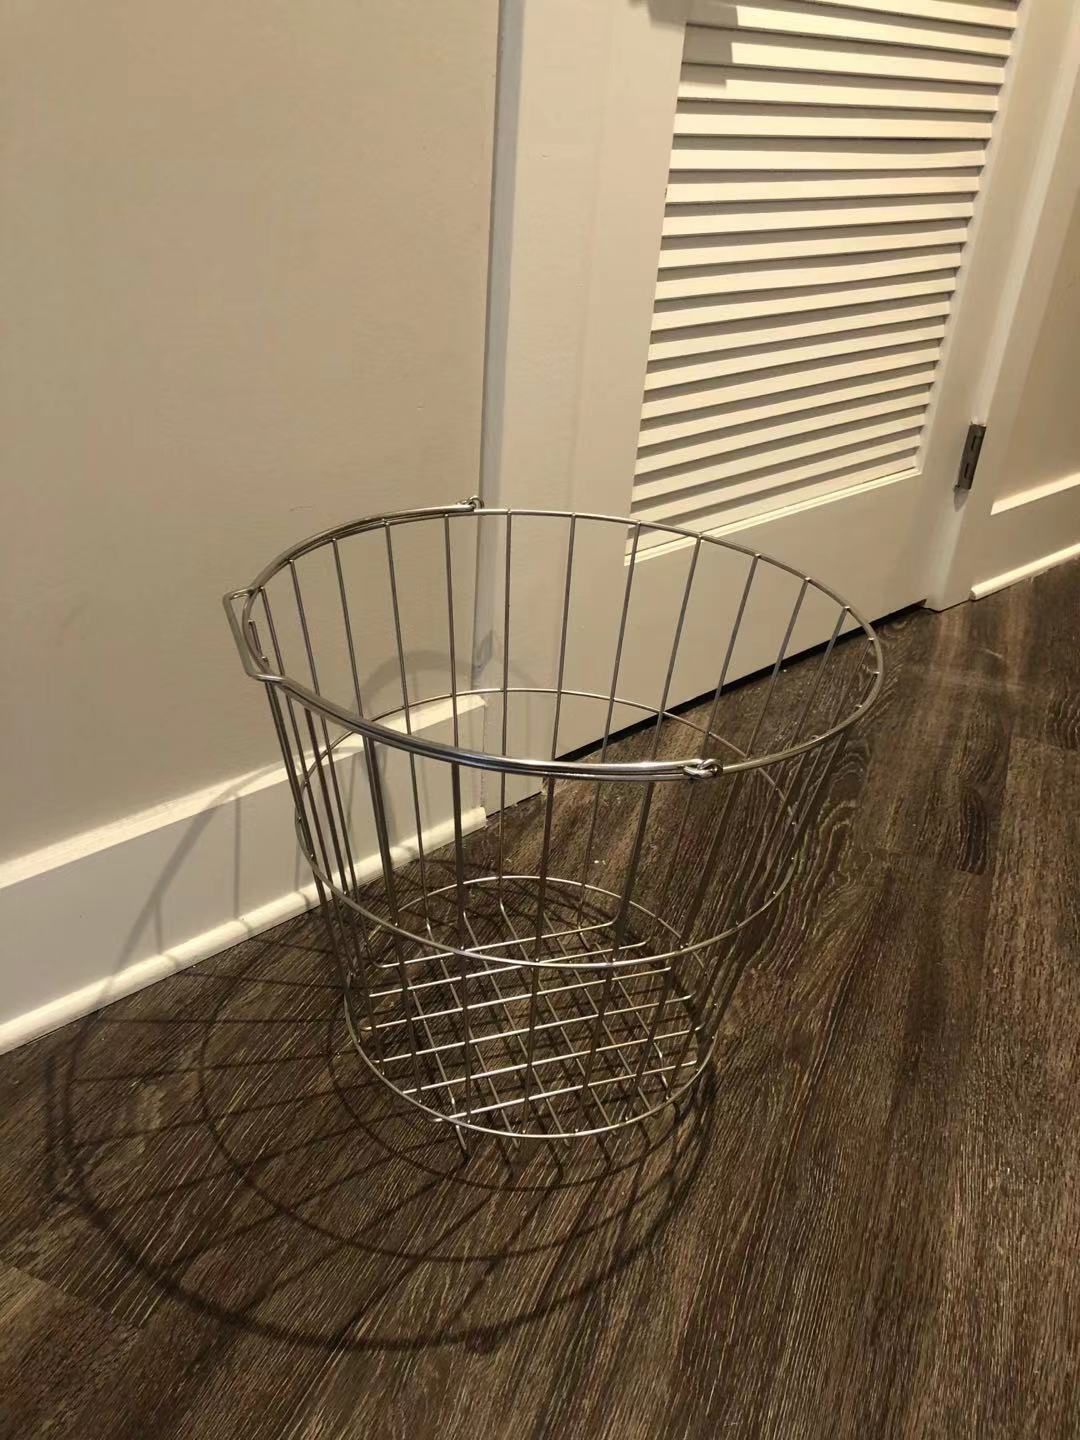 Metal laundry basket